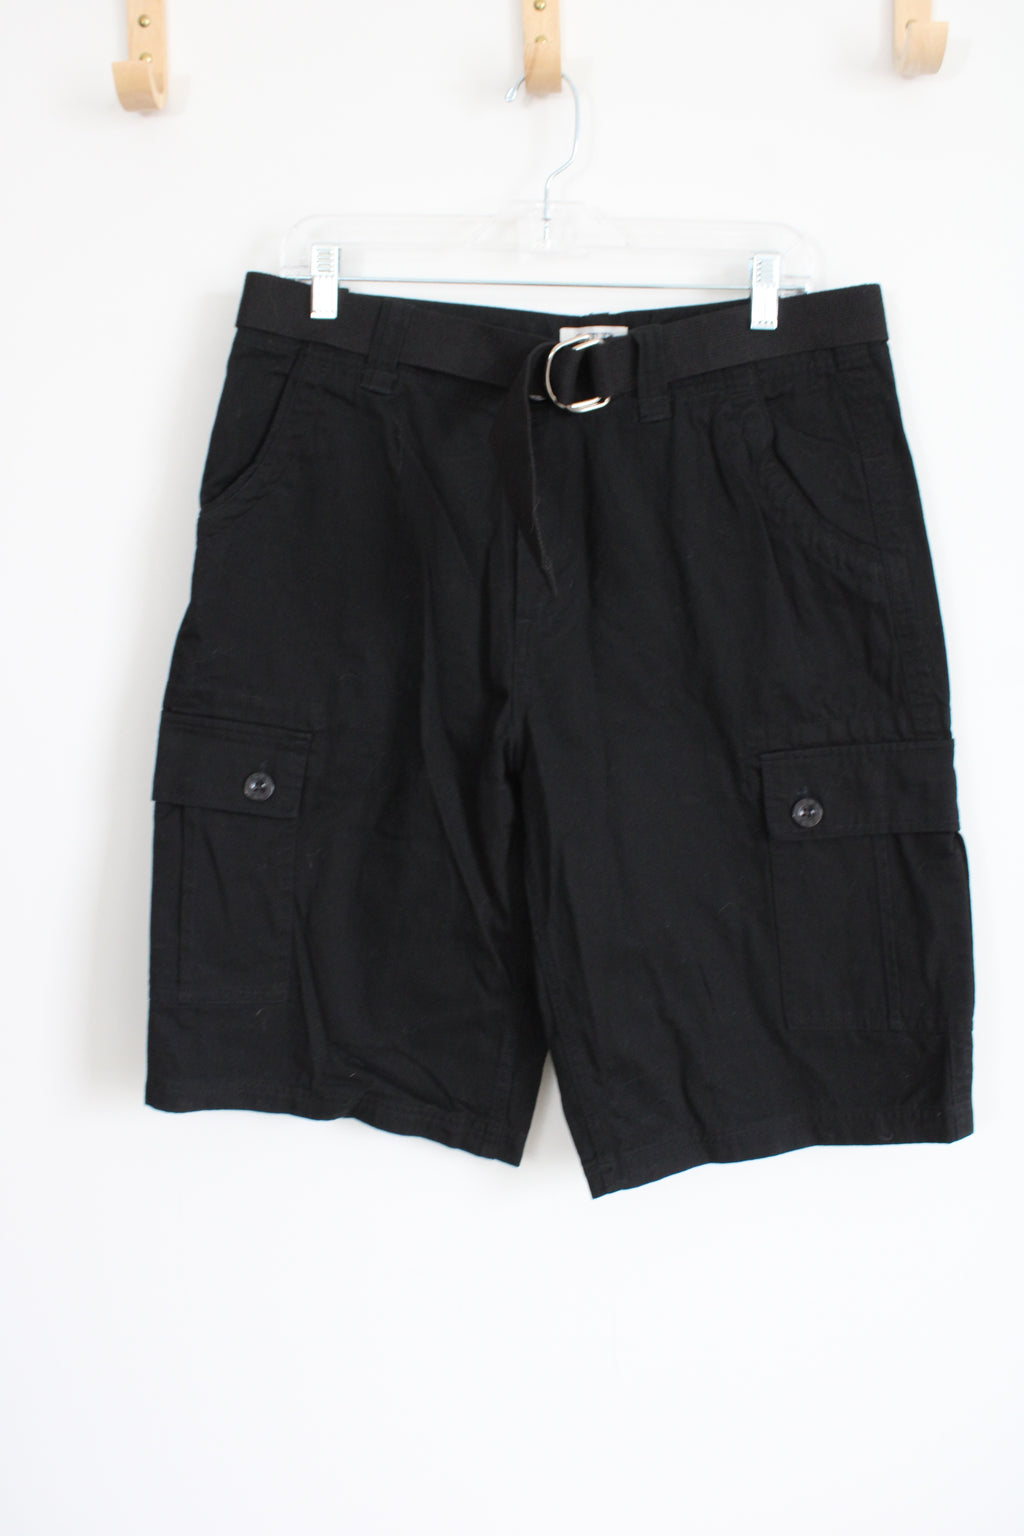 One Tough Brand Black Cargo Shorts | 32